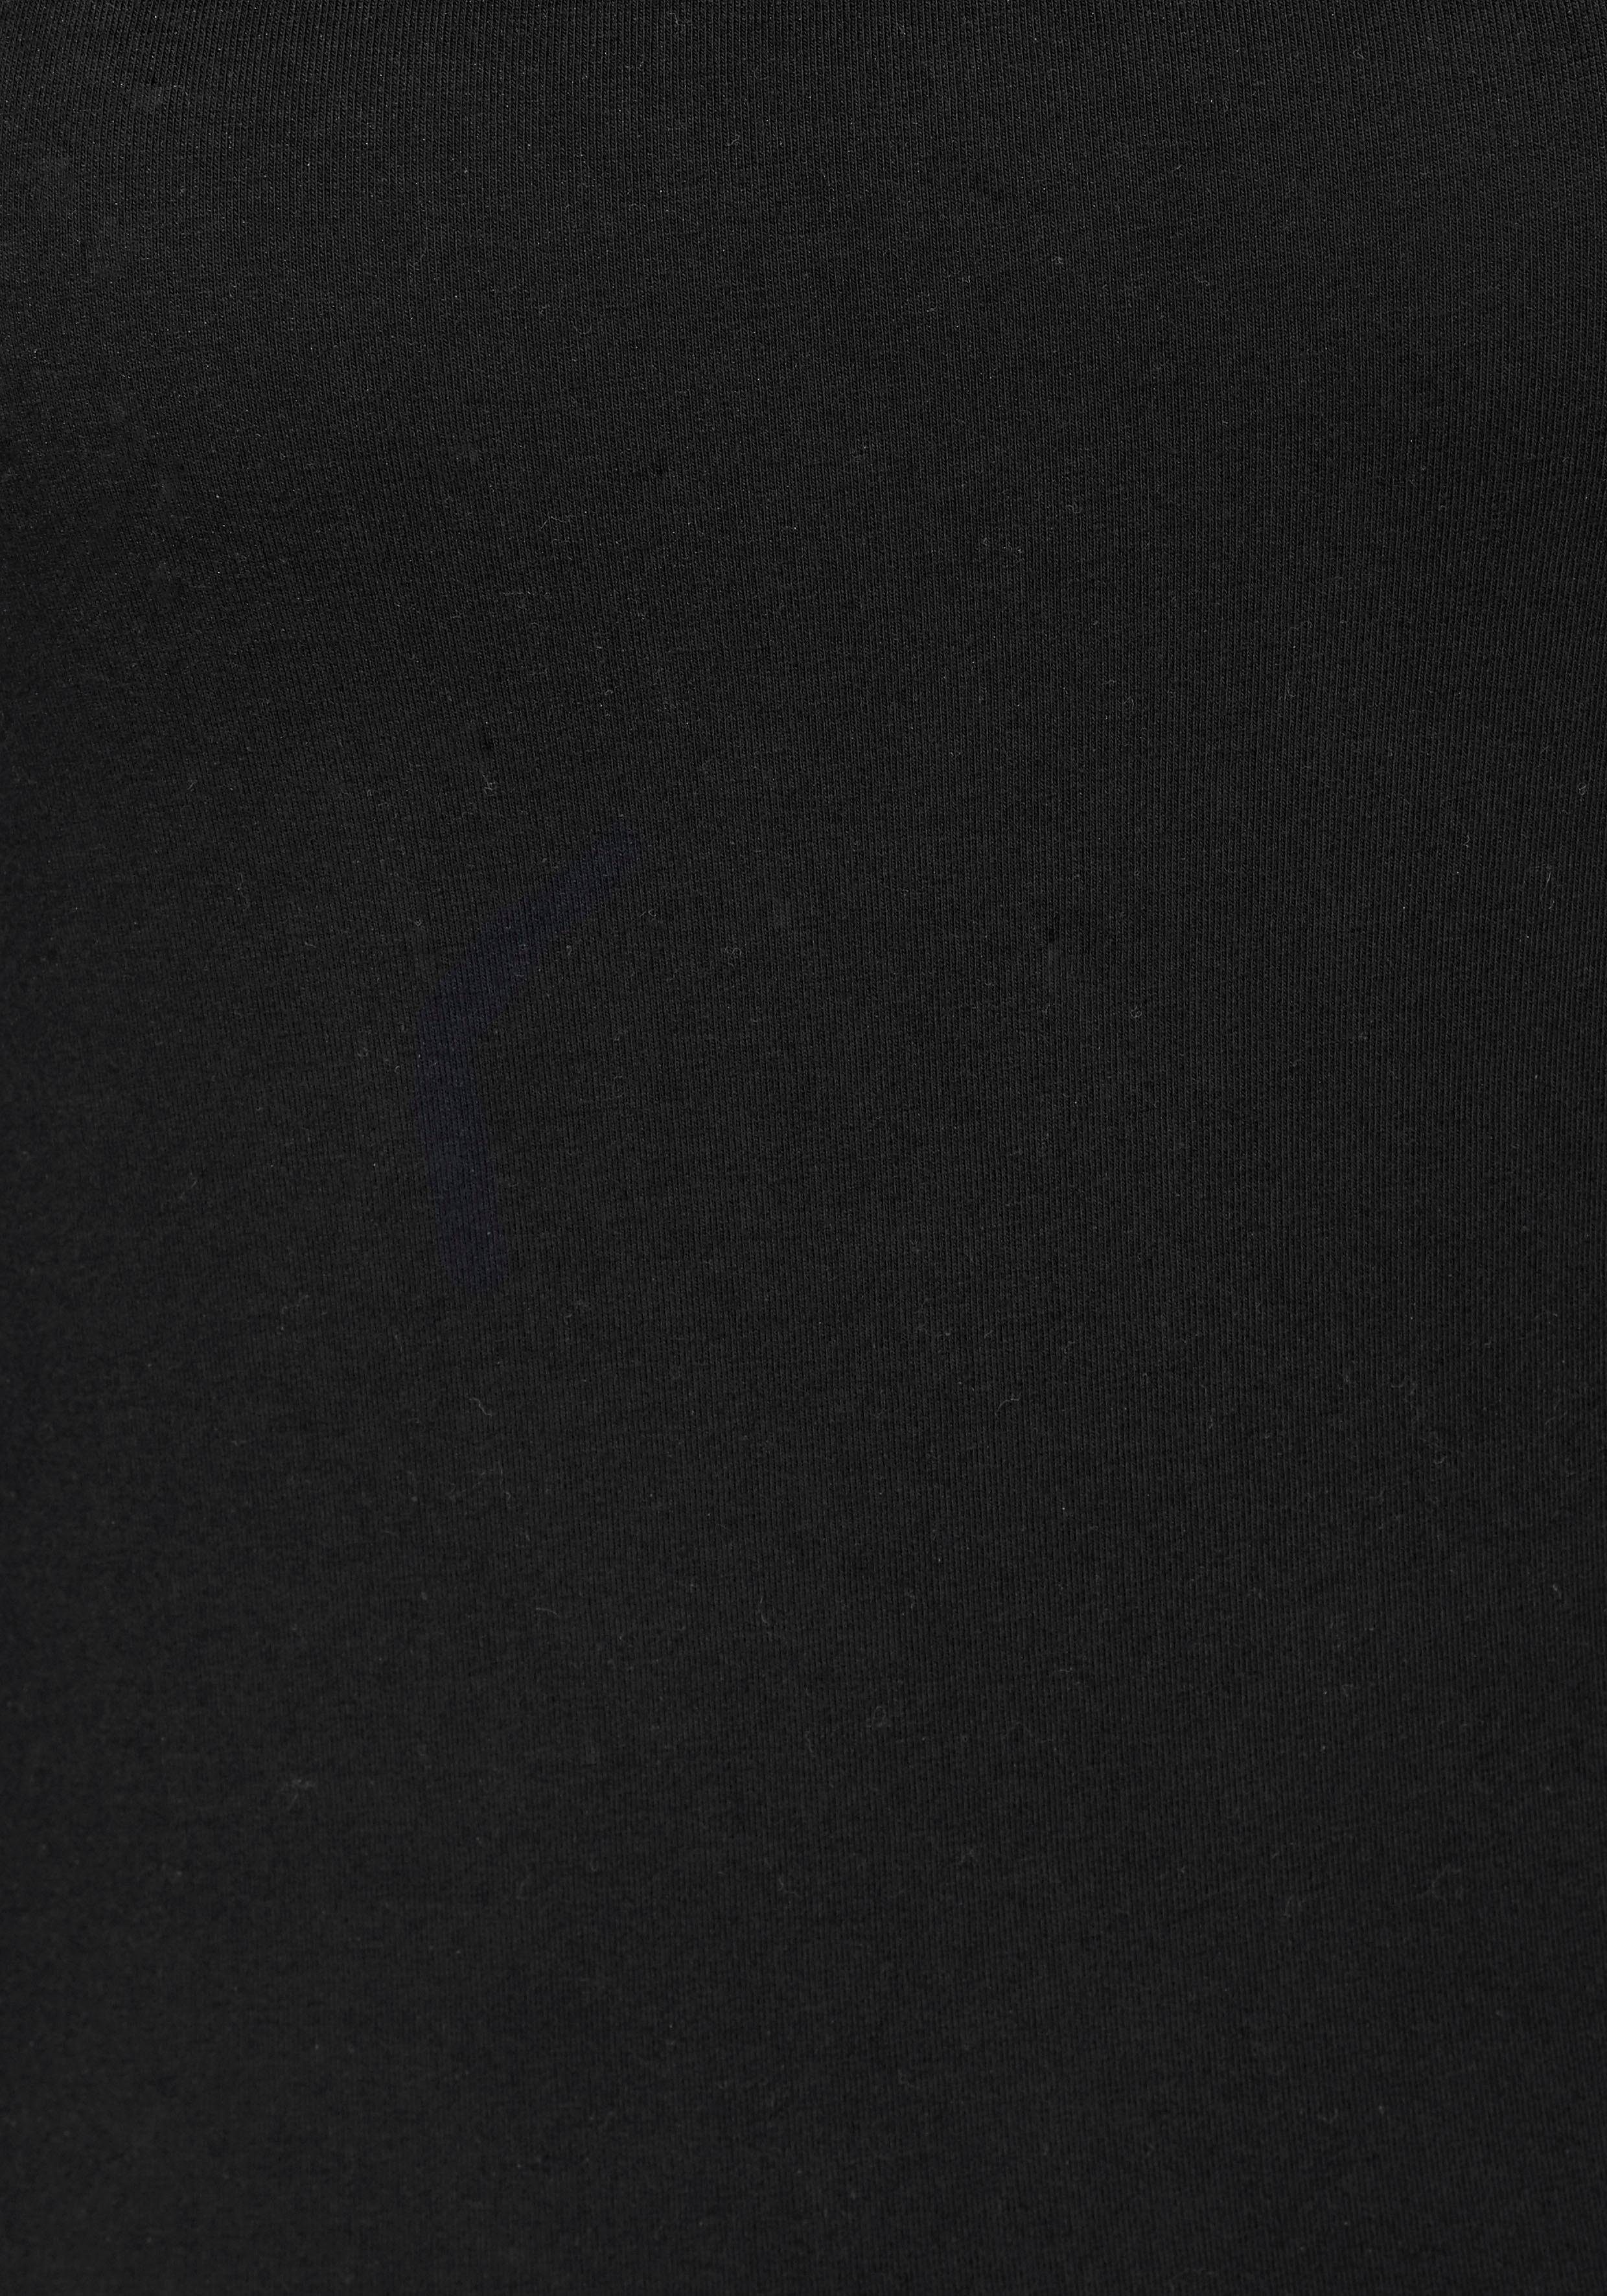 H.I.S Unterhemd elastischer aus schwarz Baumwoll-Qualität, Unterziehshirt (2er-Pack) Spaghettiträger-Top